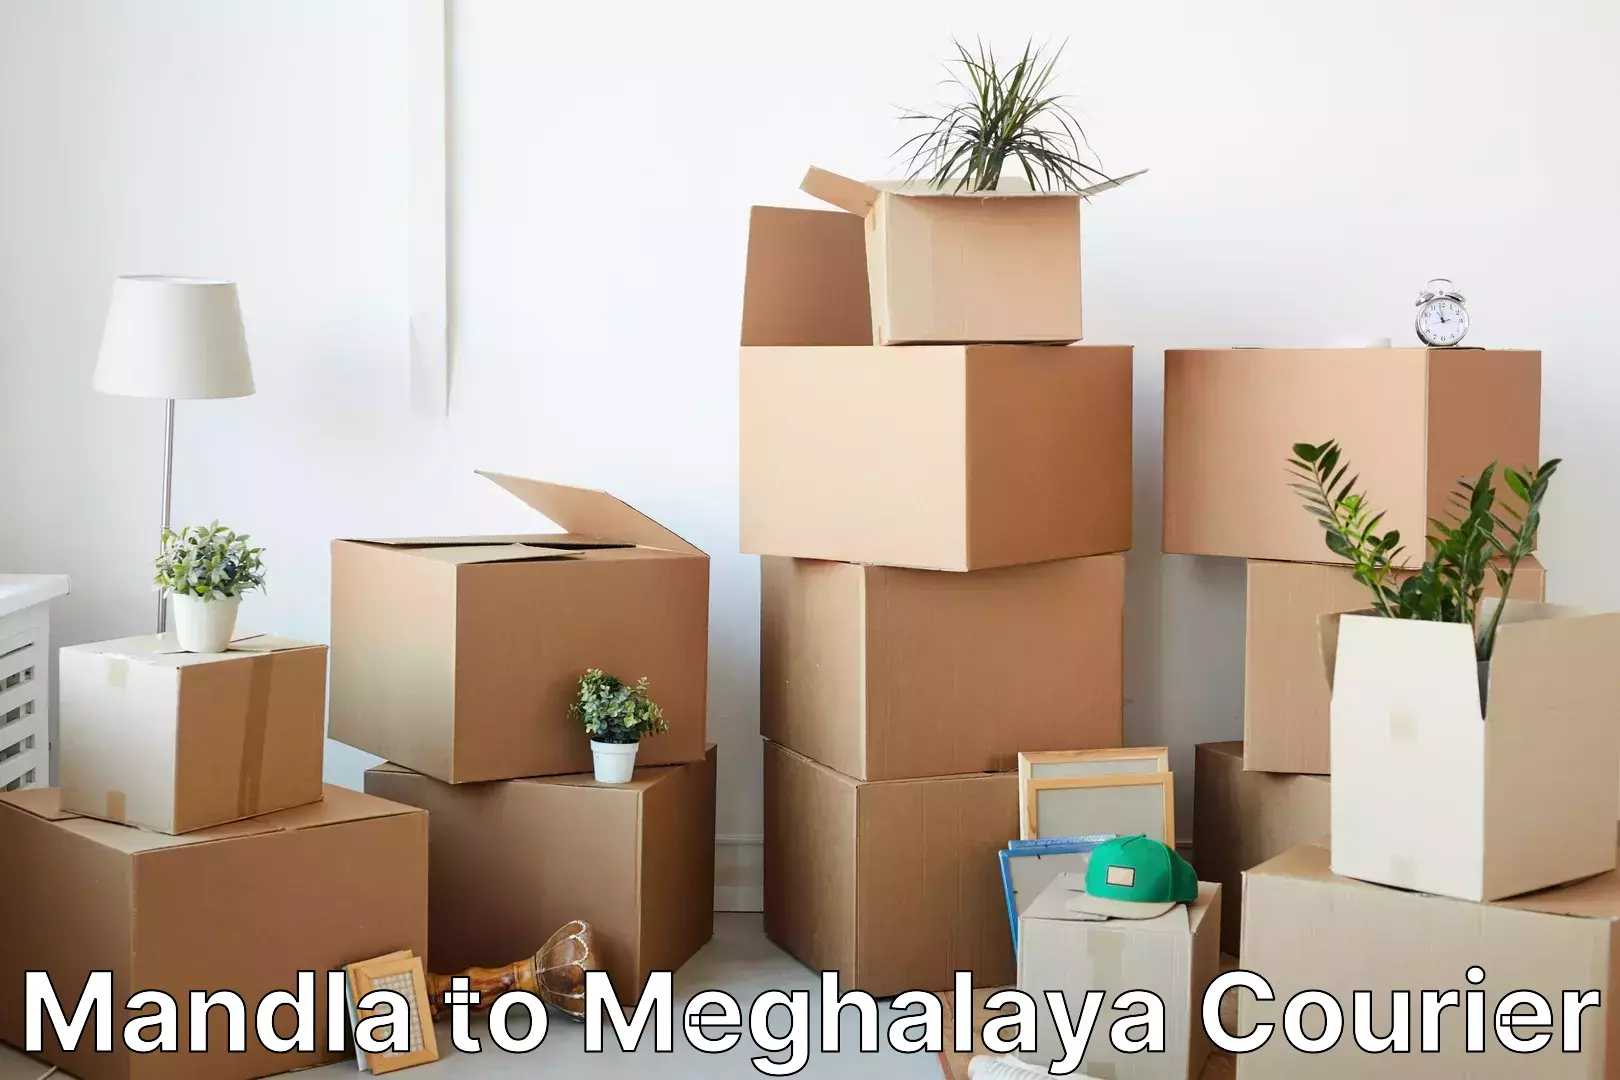 Courier service partnerships Mandla to Meghalaya